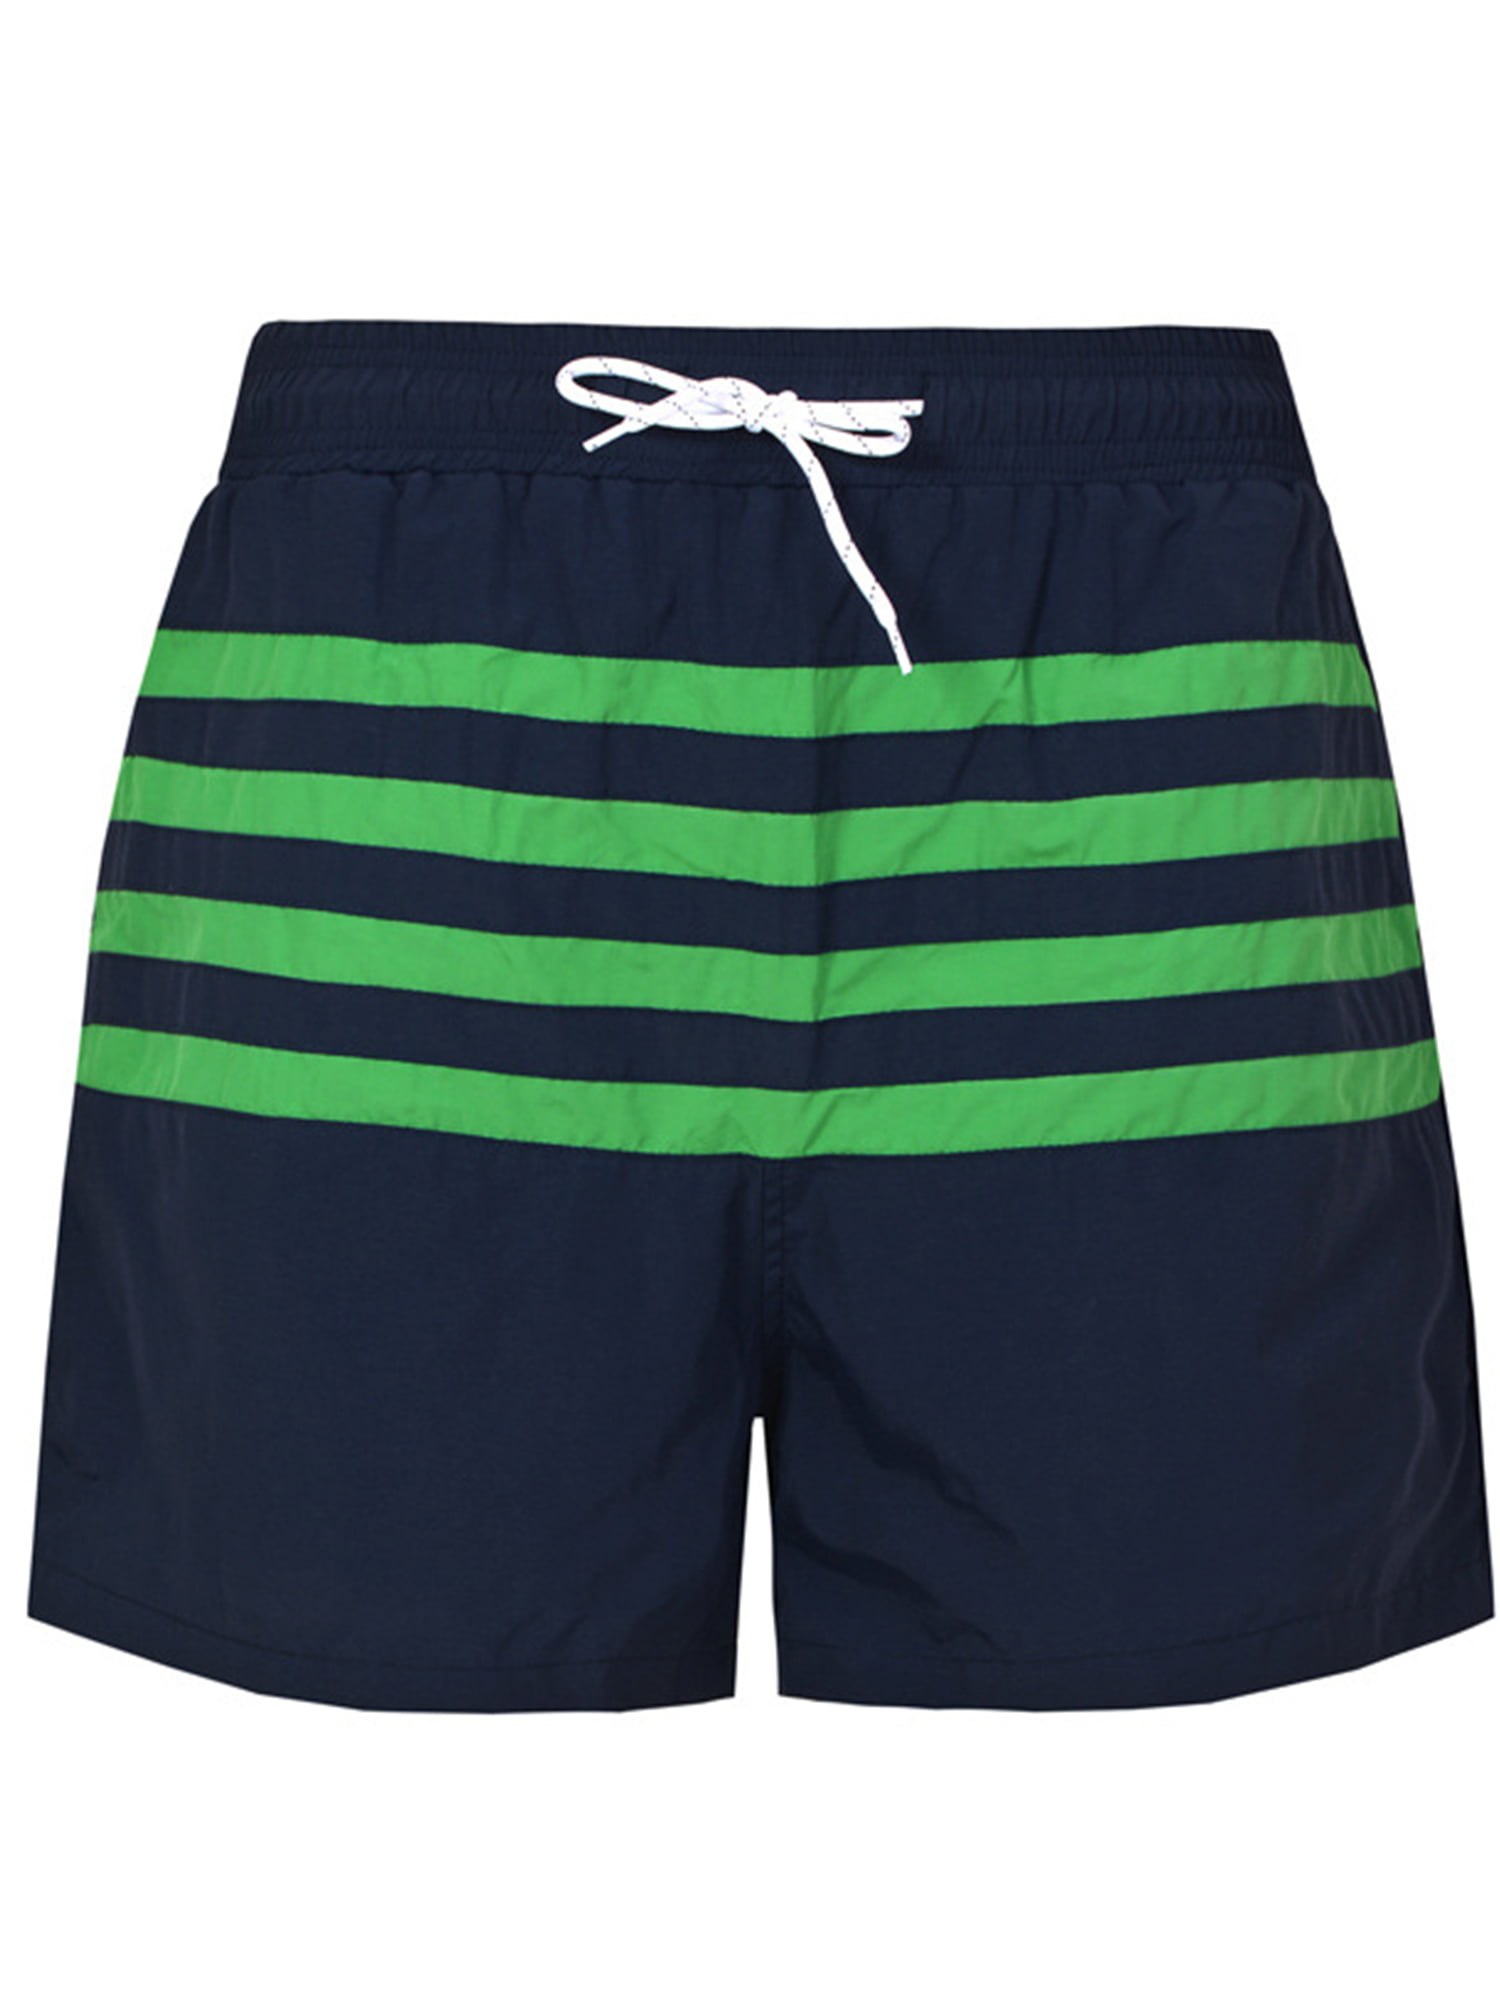 North 15 Boy's Beach Swim Trunks Shorts with Cargo Pockets 